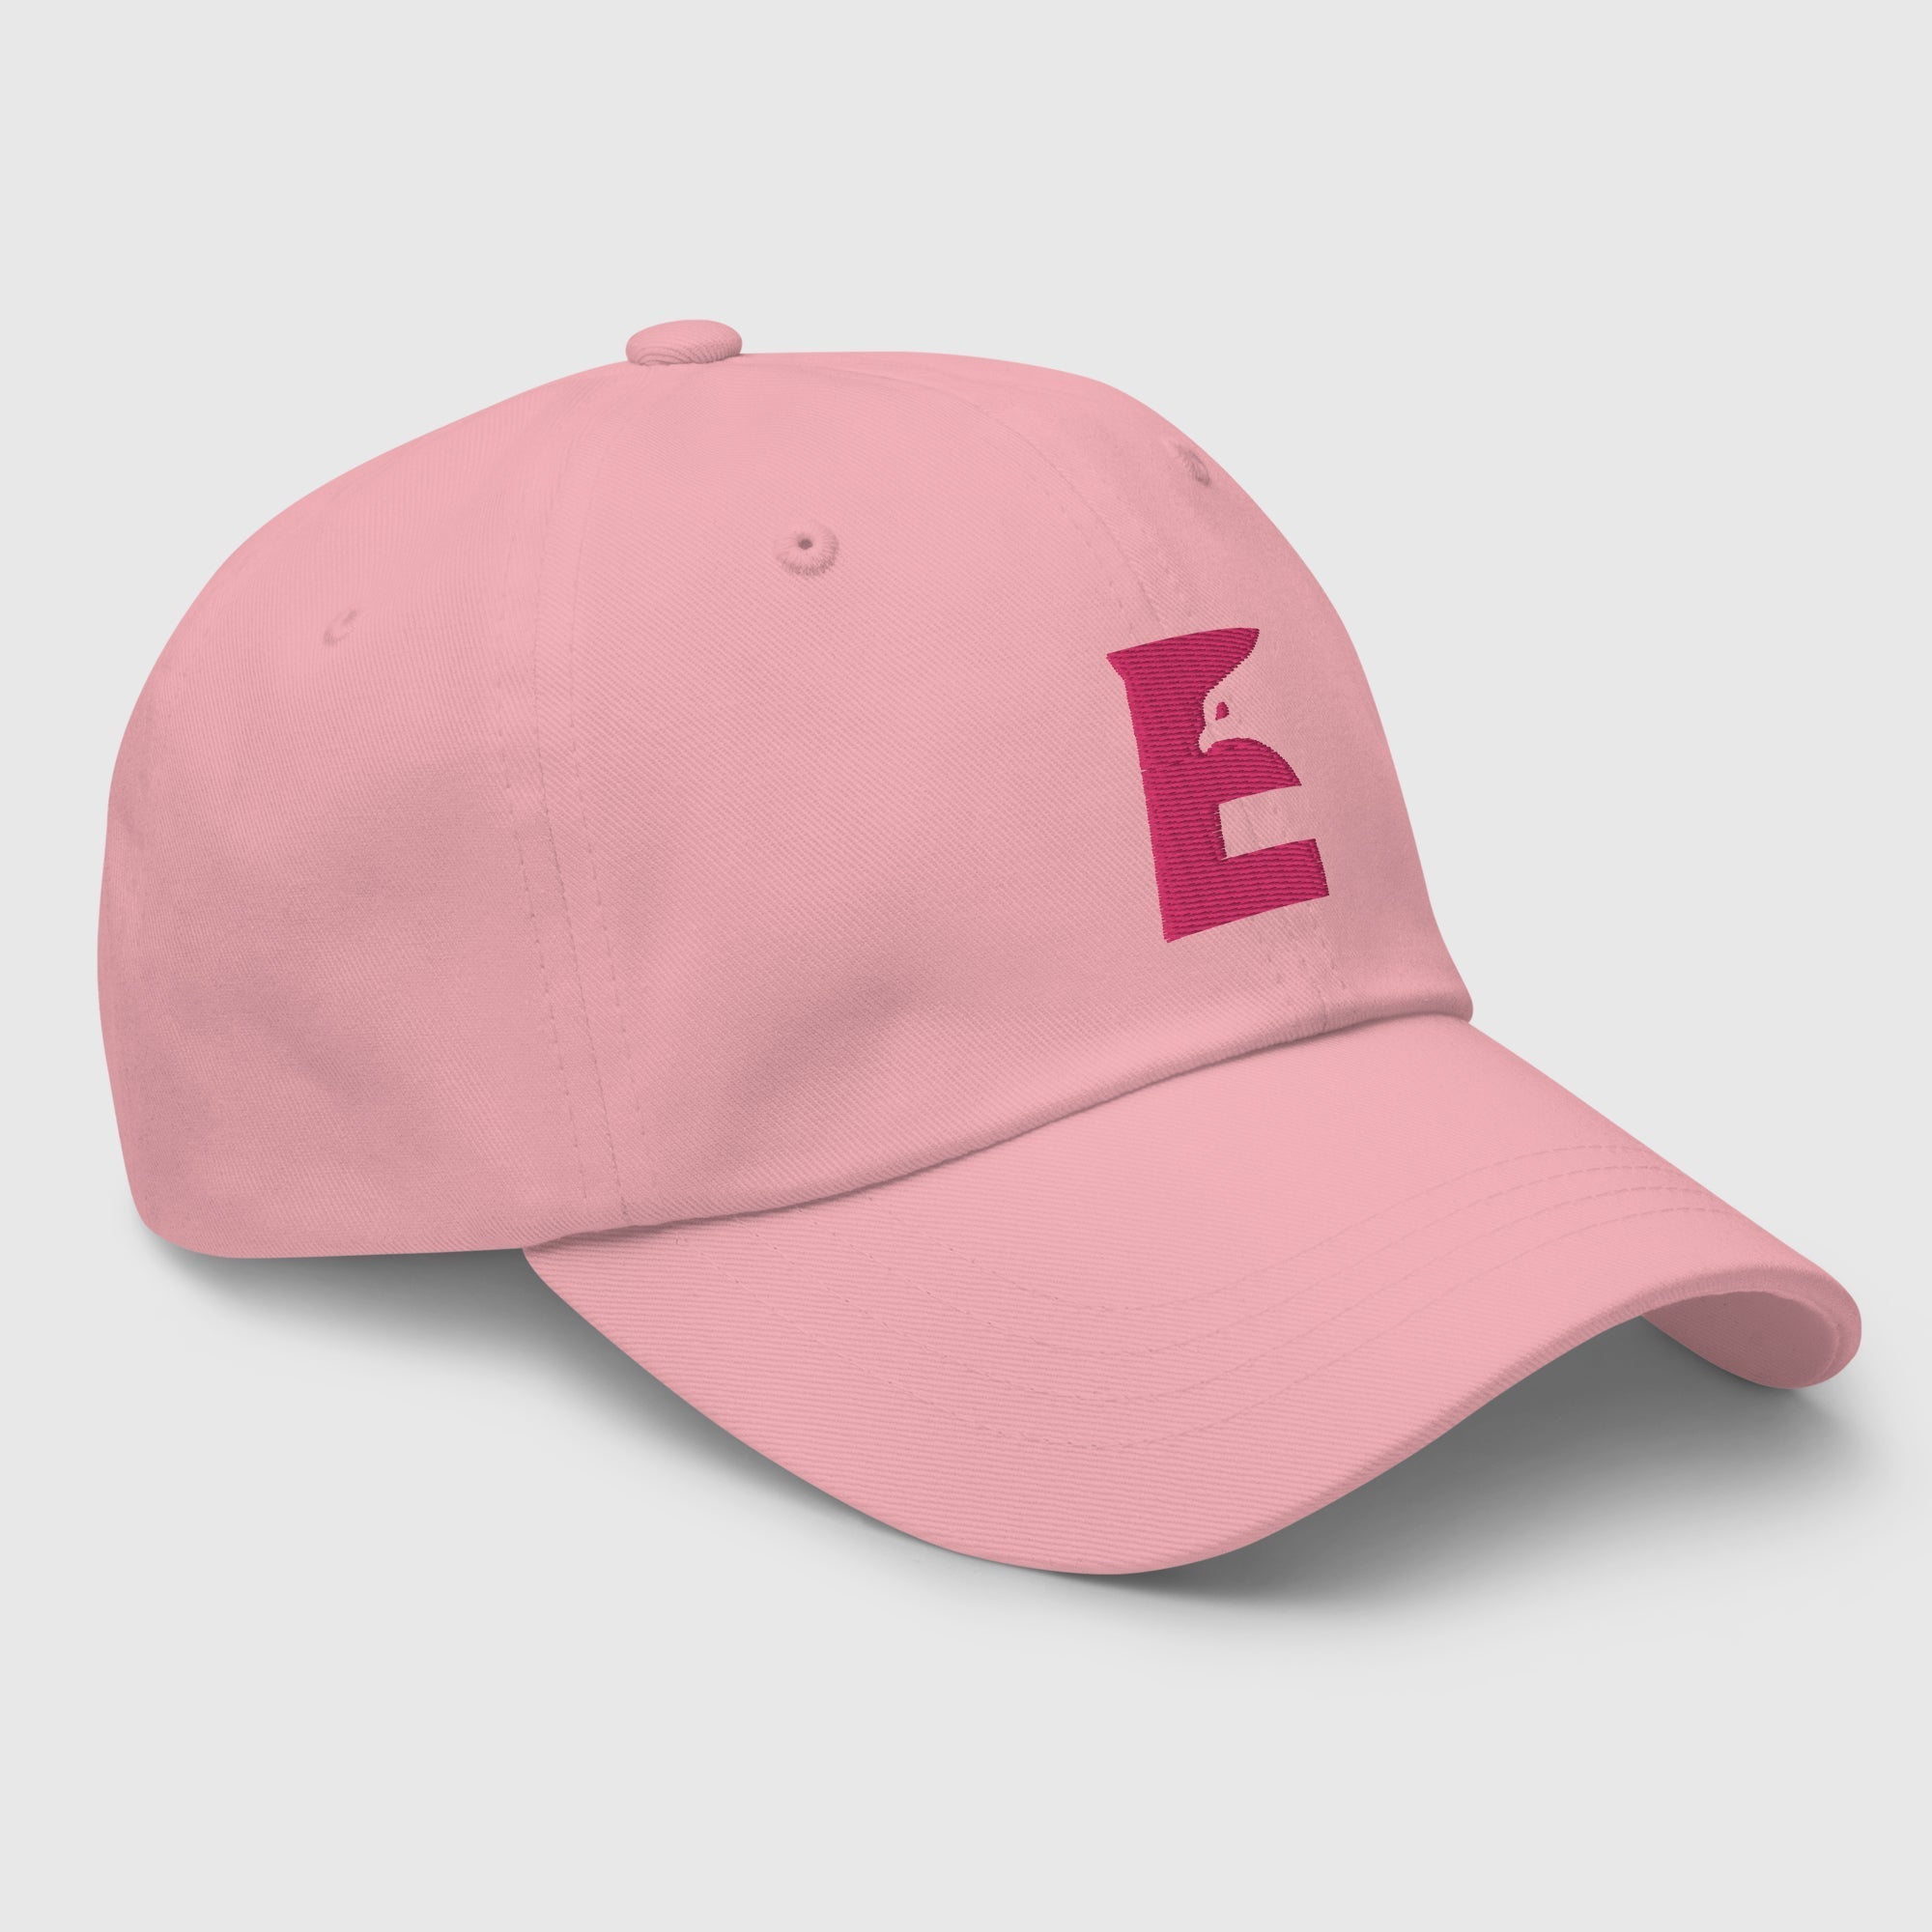 Cap Khaki Pink - Eagle